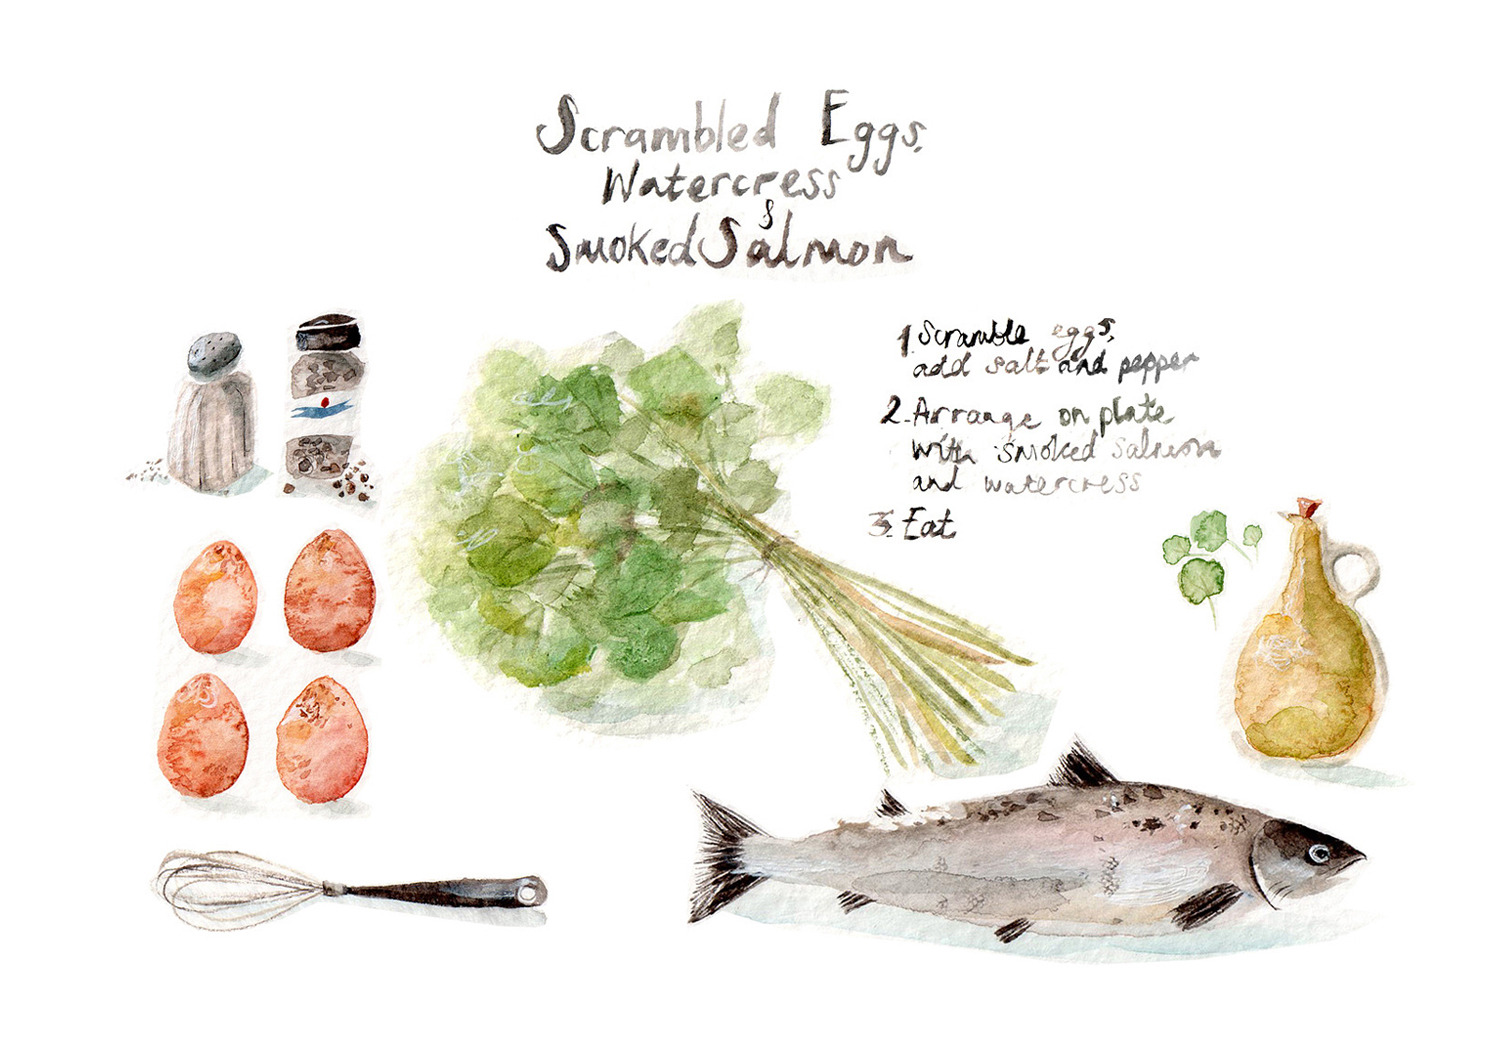 _scrambed-eggs-watercress-salmon_1500_1500